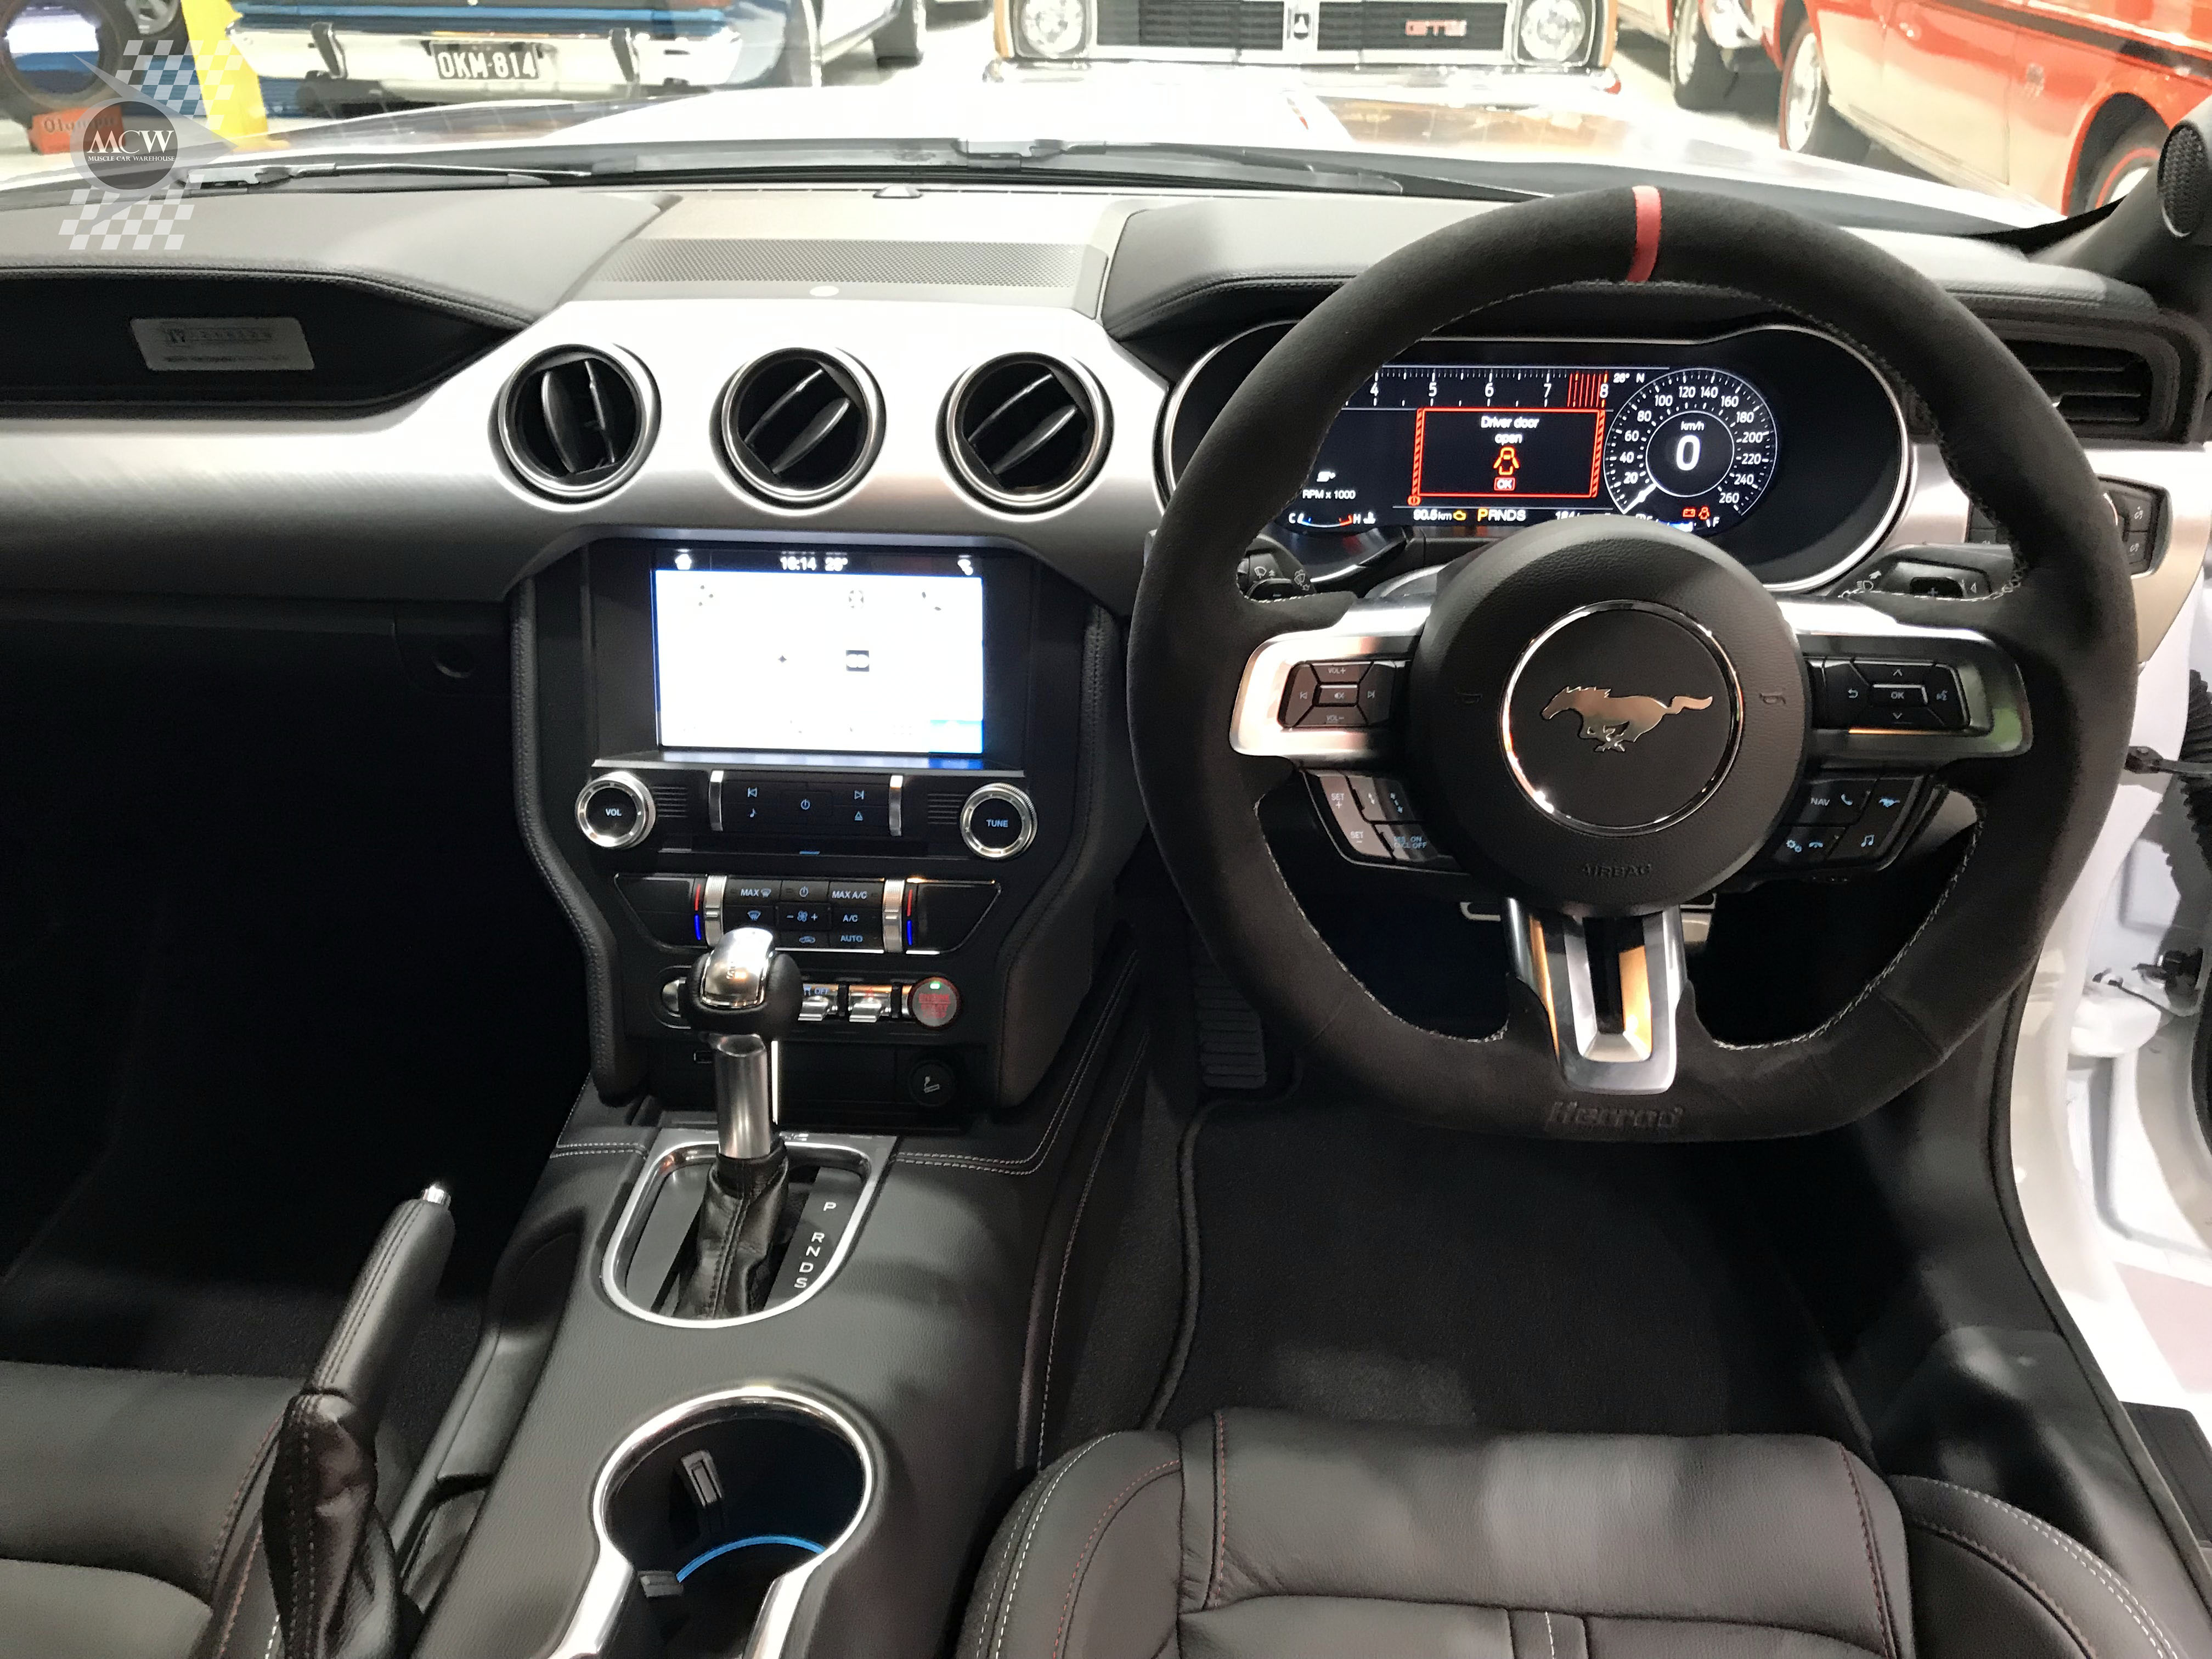 Ford Mustang DJR Interior | Muscle Car Warehouse